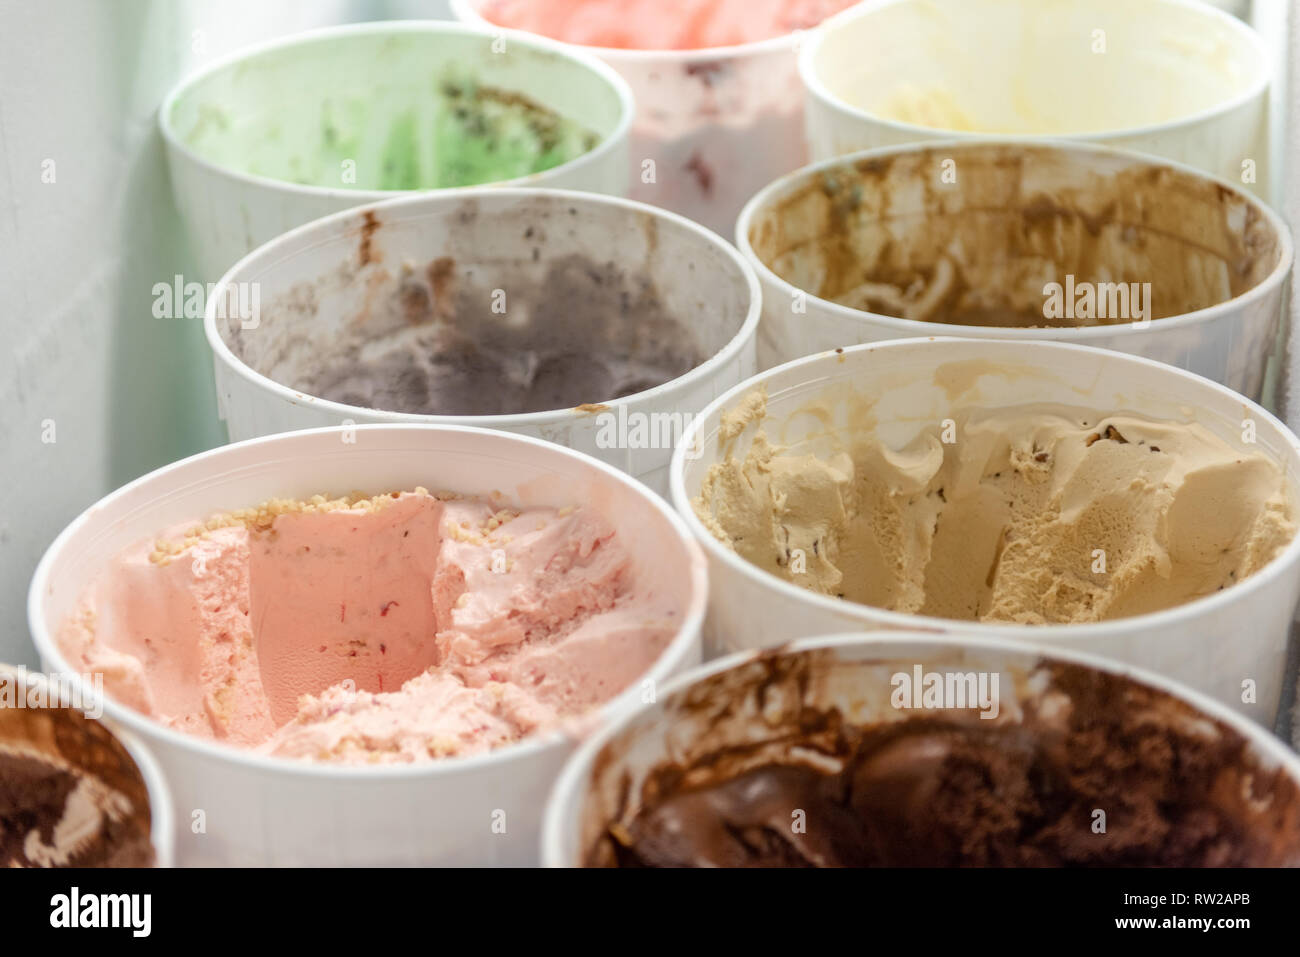 https://c8.alamy.com/comp/RW2APB/plastic-bins-full-of-ice-cream-in-freezer-pokomoke-maryland-RW2APB.jpg